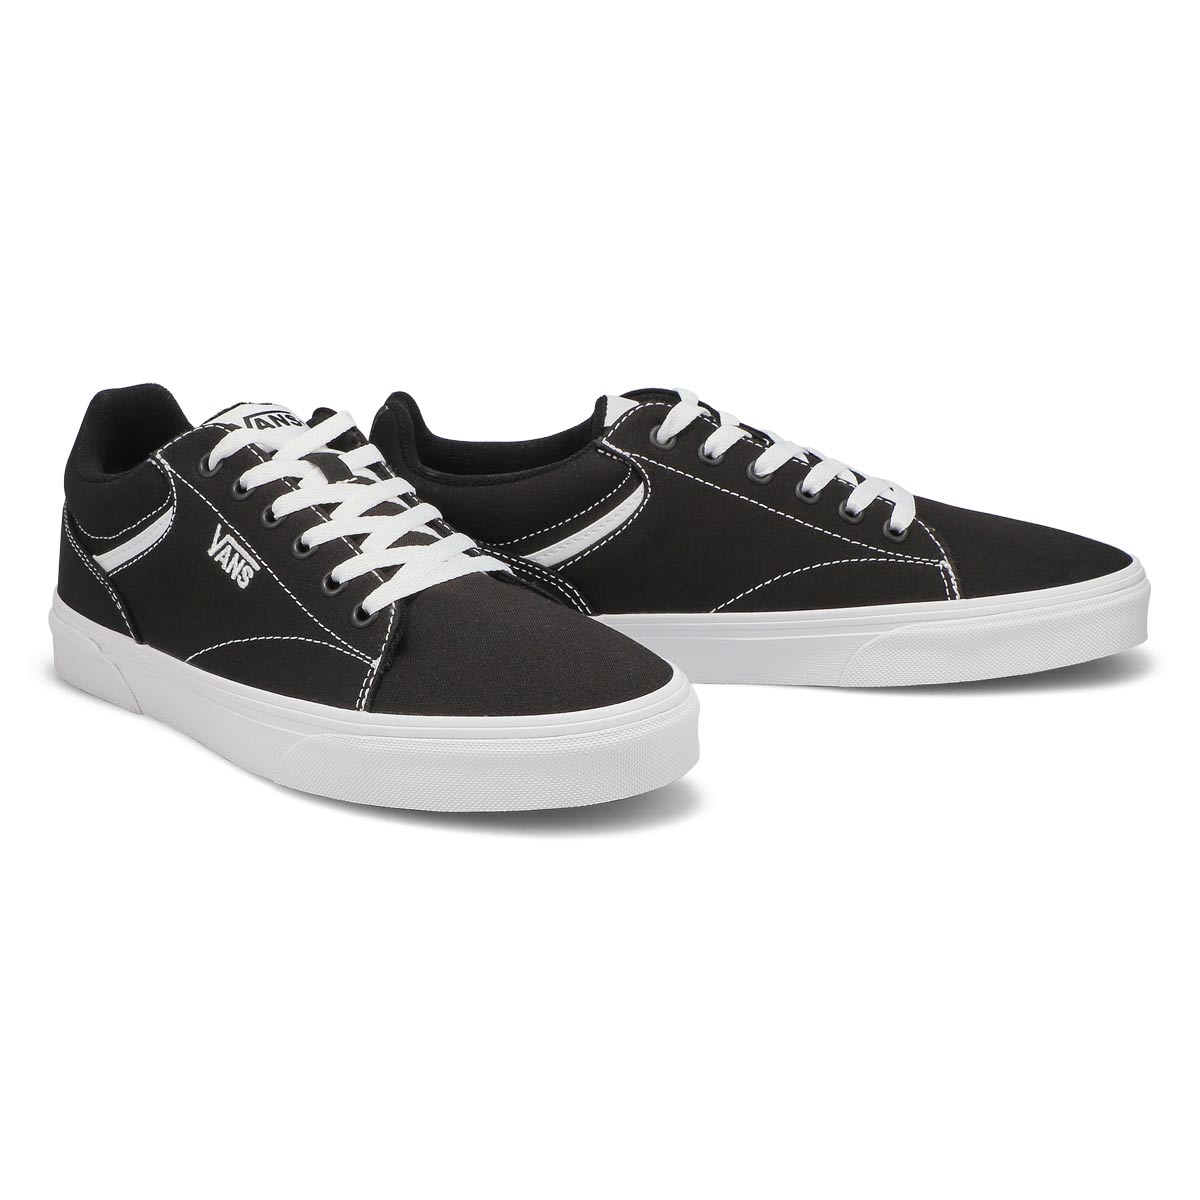 Men's Seldan Lace Up Sneaker - Black/White